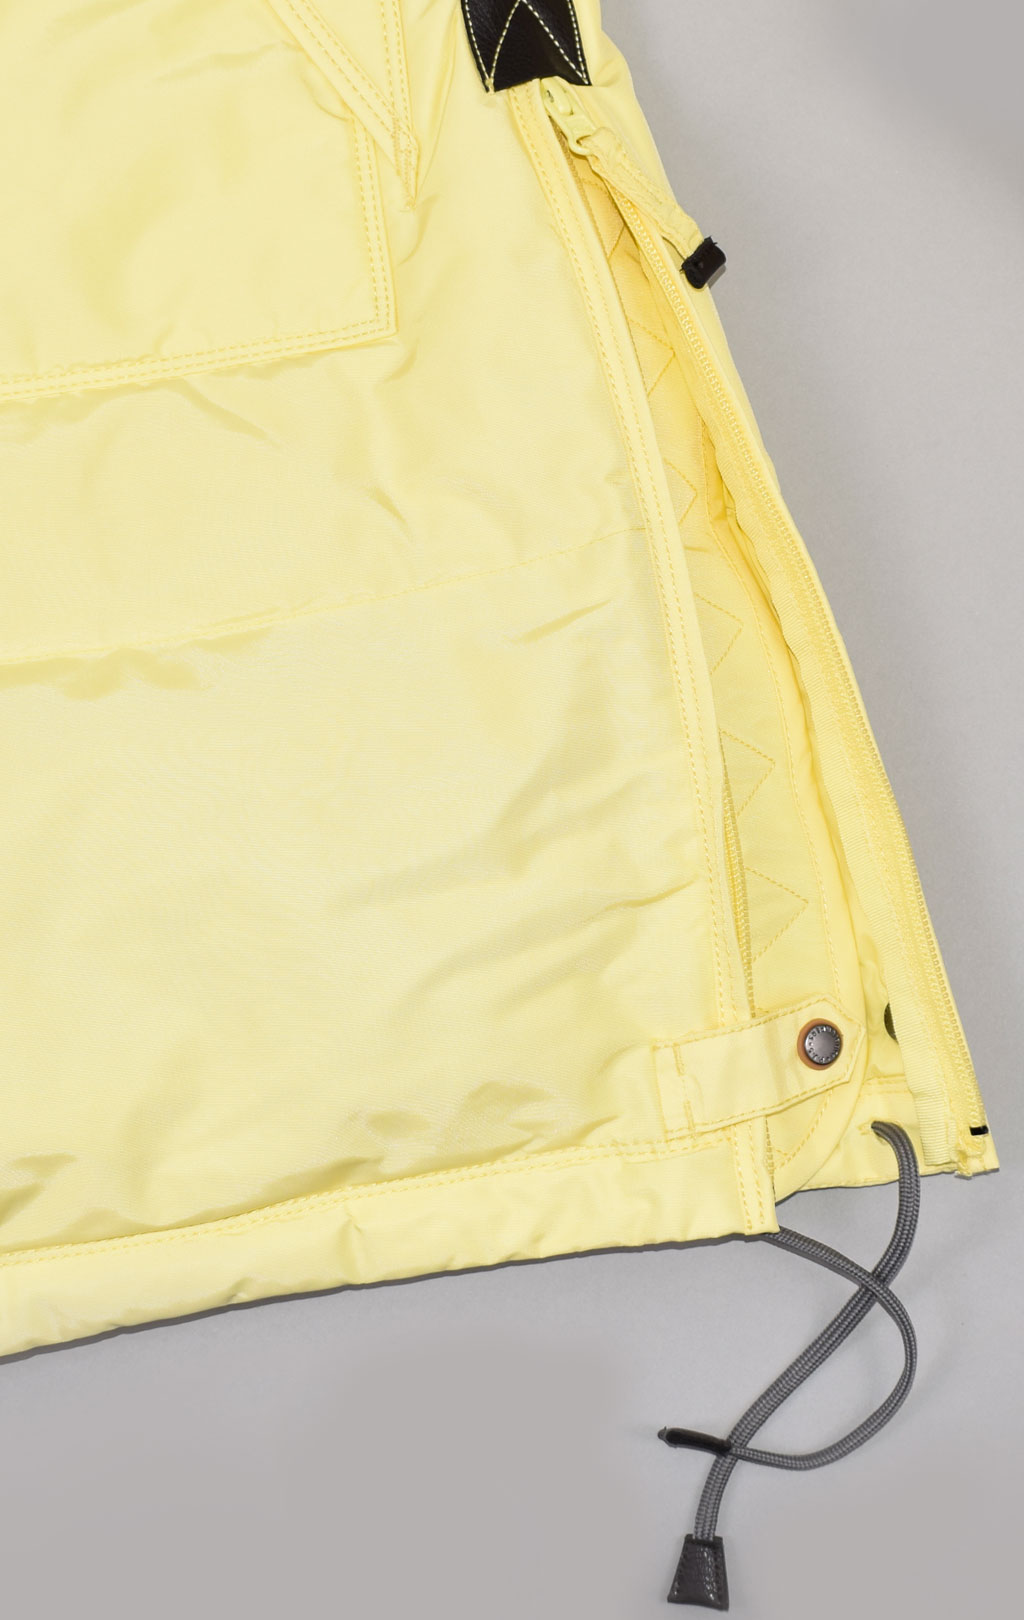 Женская куртка-пуховик PARAJUMPERS LONG BEAR FW 21/22 dusty yellow 